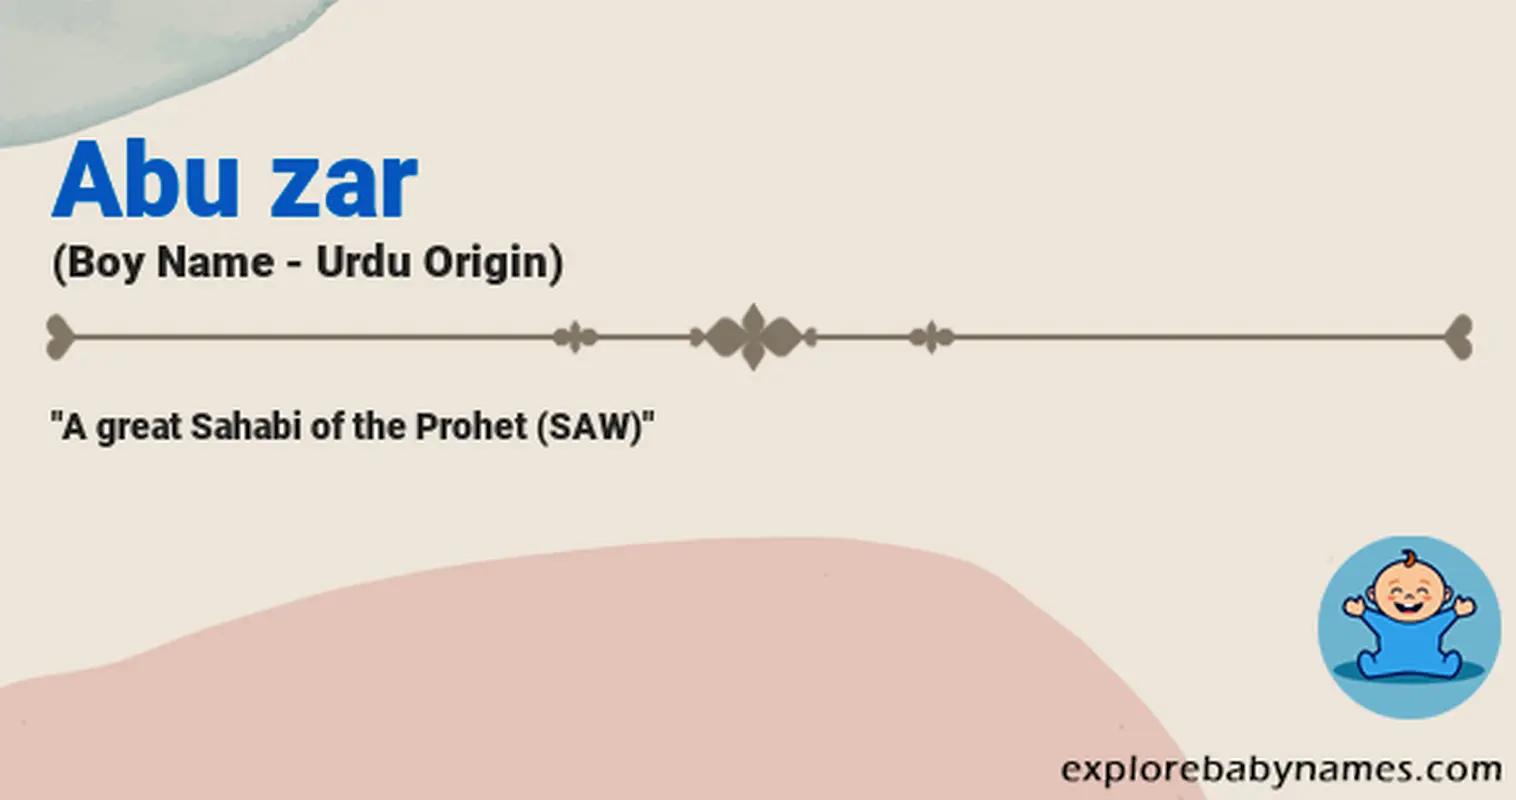 Meaning of Abu zar